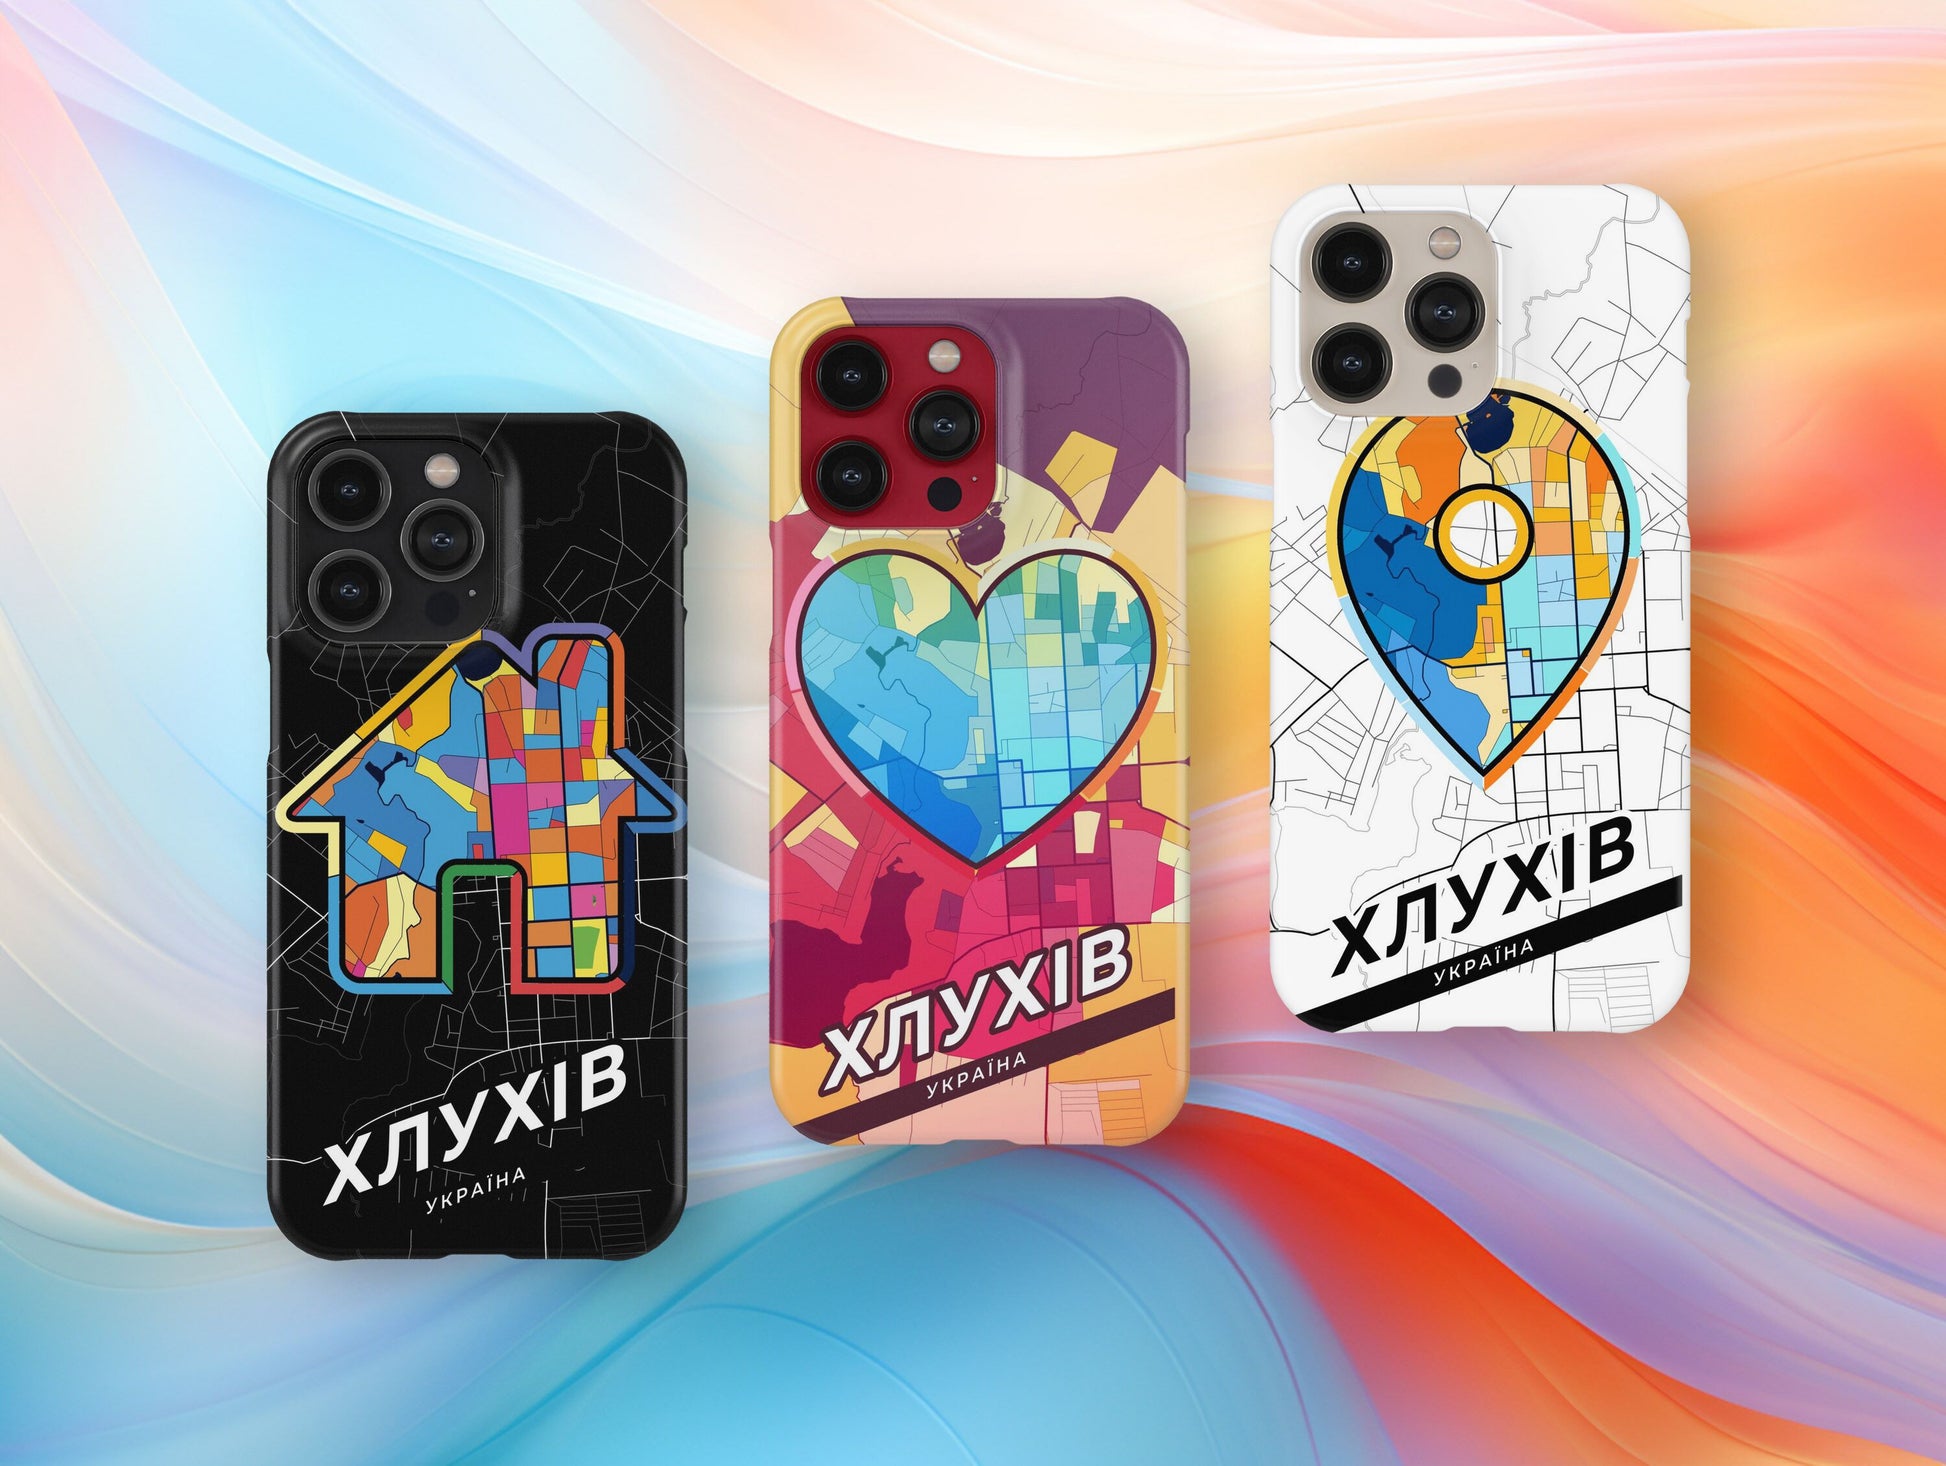 Hlukhiv Ukraine slim phone case with colorful icon. Birthday, wedding or housewarming gift. Couple match cases.